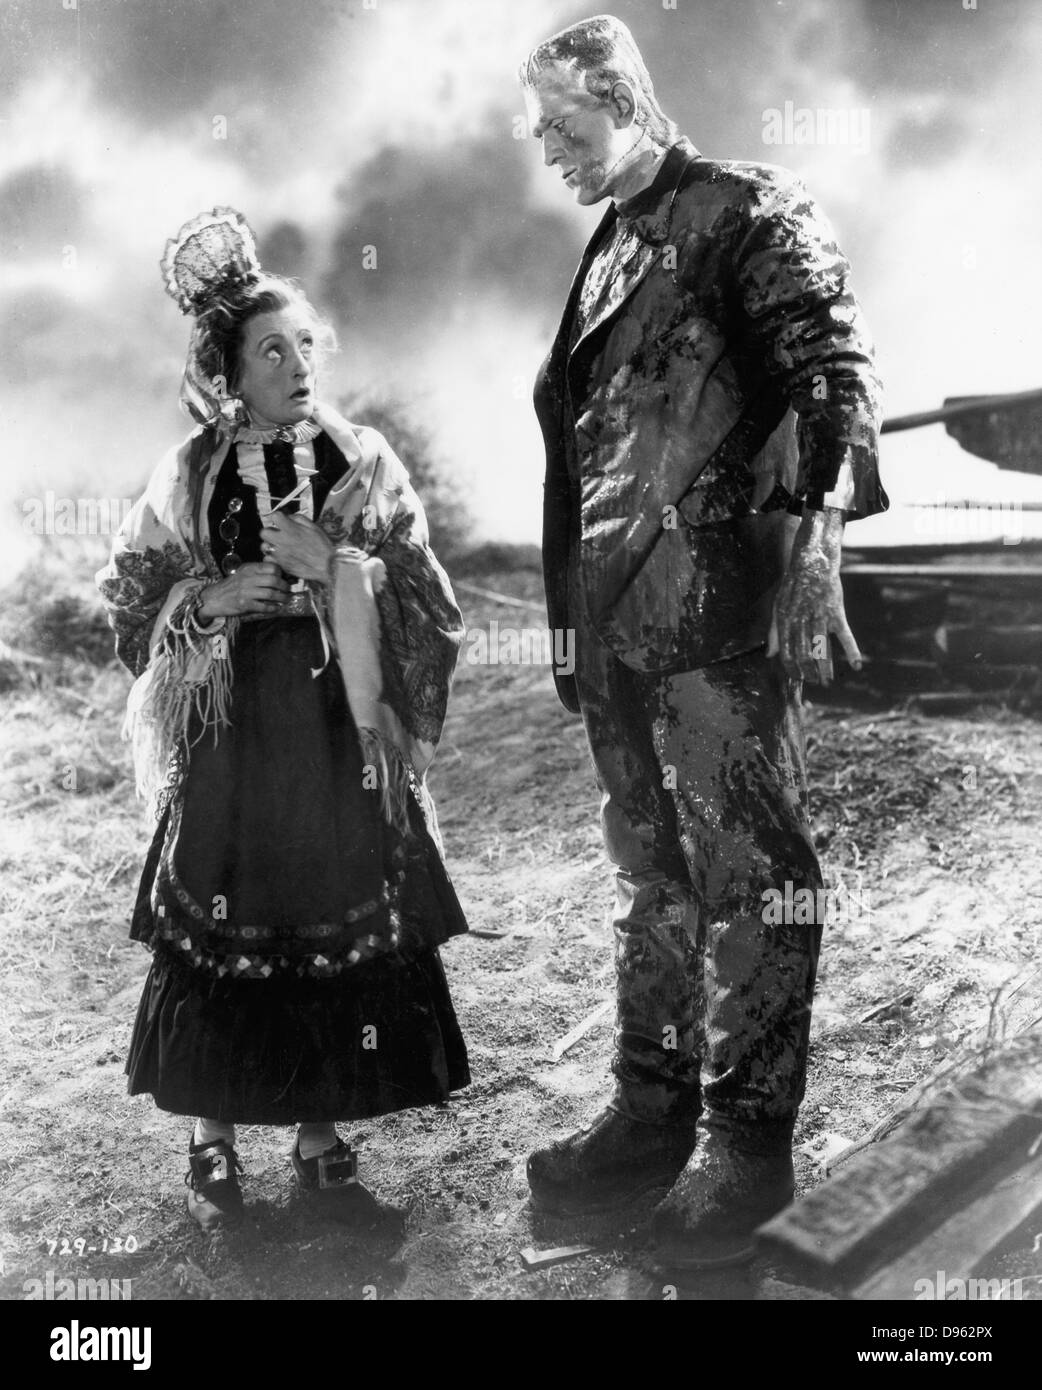 Boris Karloff (1887-1969) British-born American film actor, as the monster Frankenstein.  1931 Universal film 'Frankenstein' based on the novel by Mary Shelley. Stock Photo